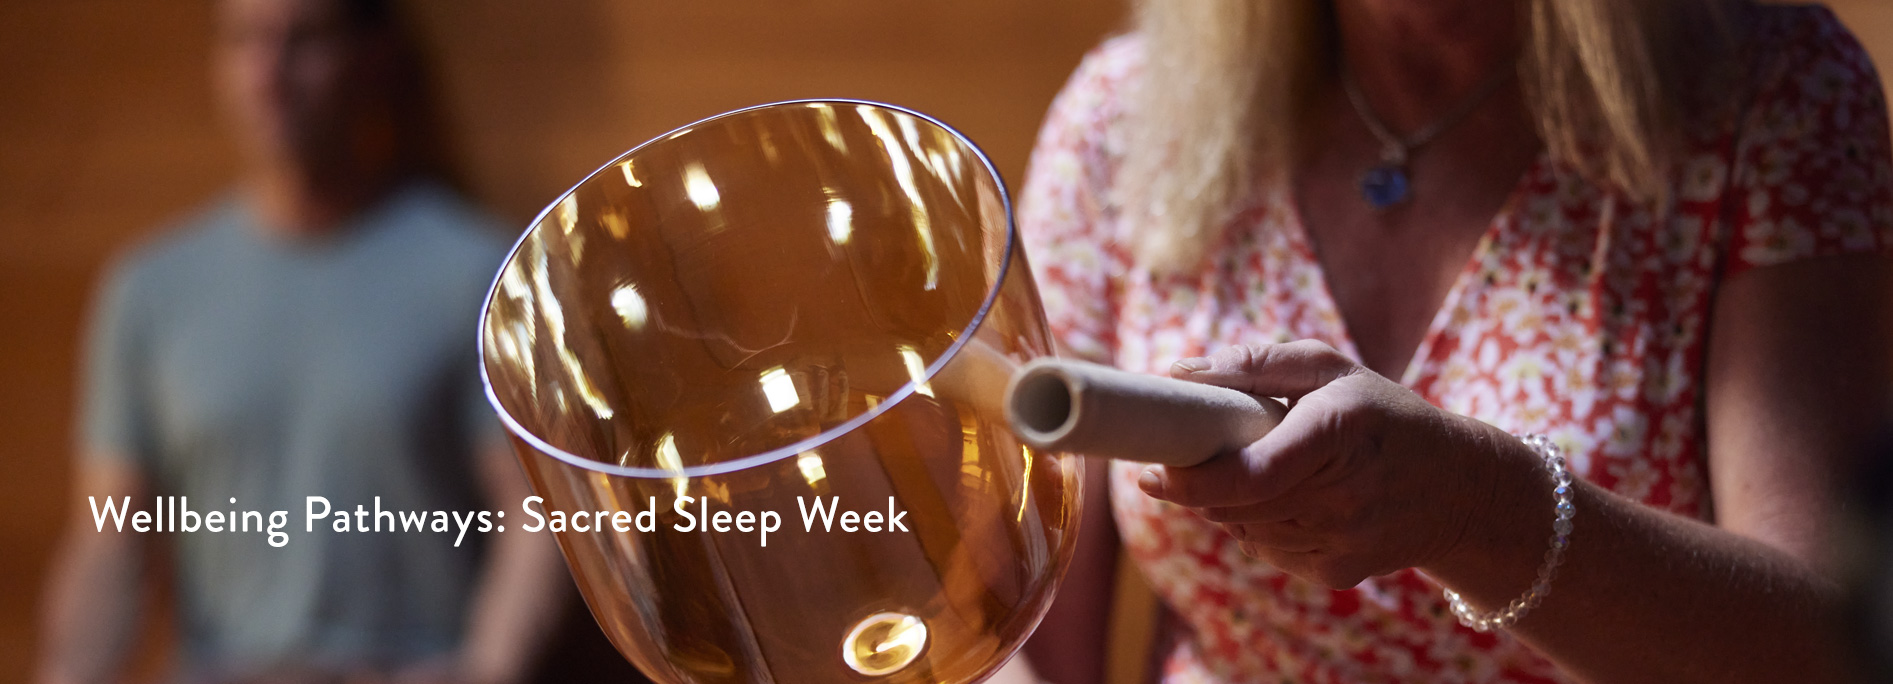 Sacred Sleep Week Sound Healing Session at Mii amo